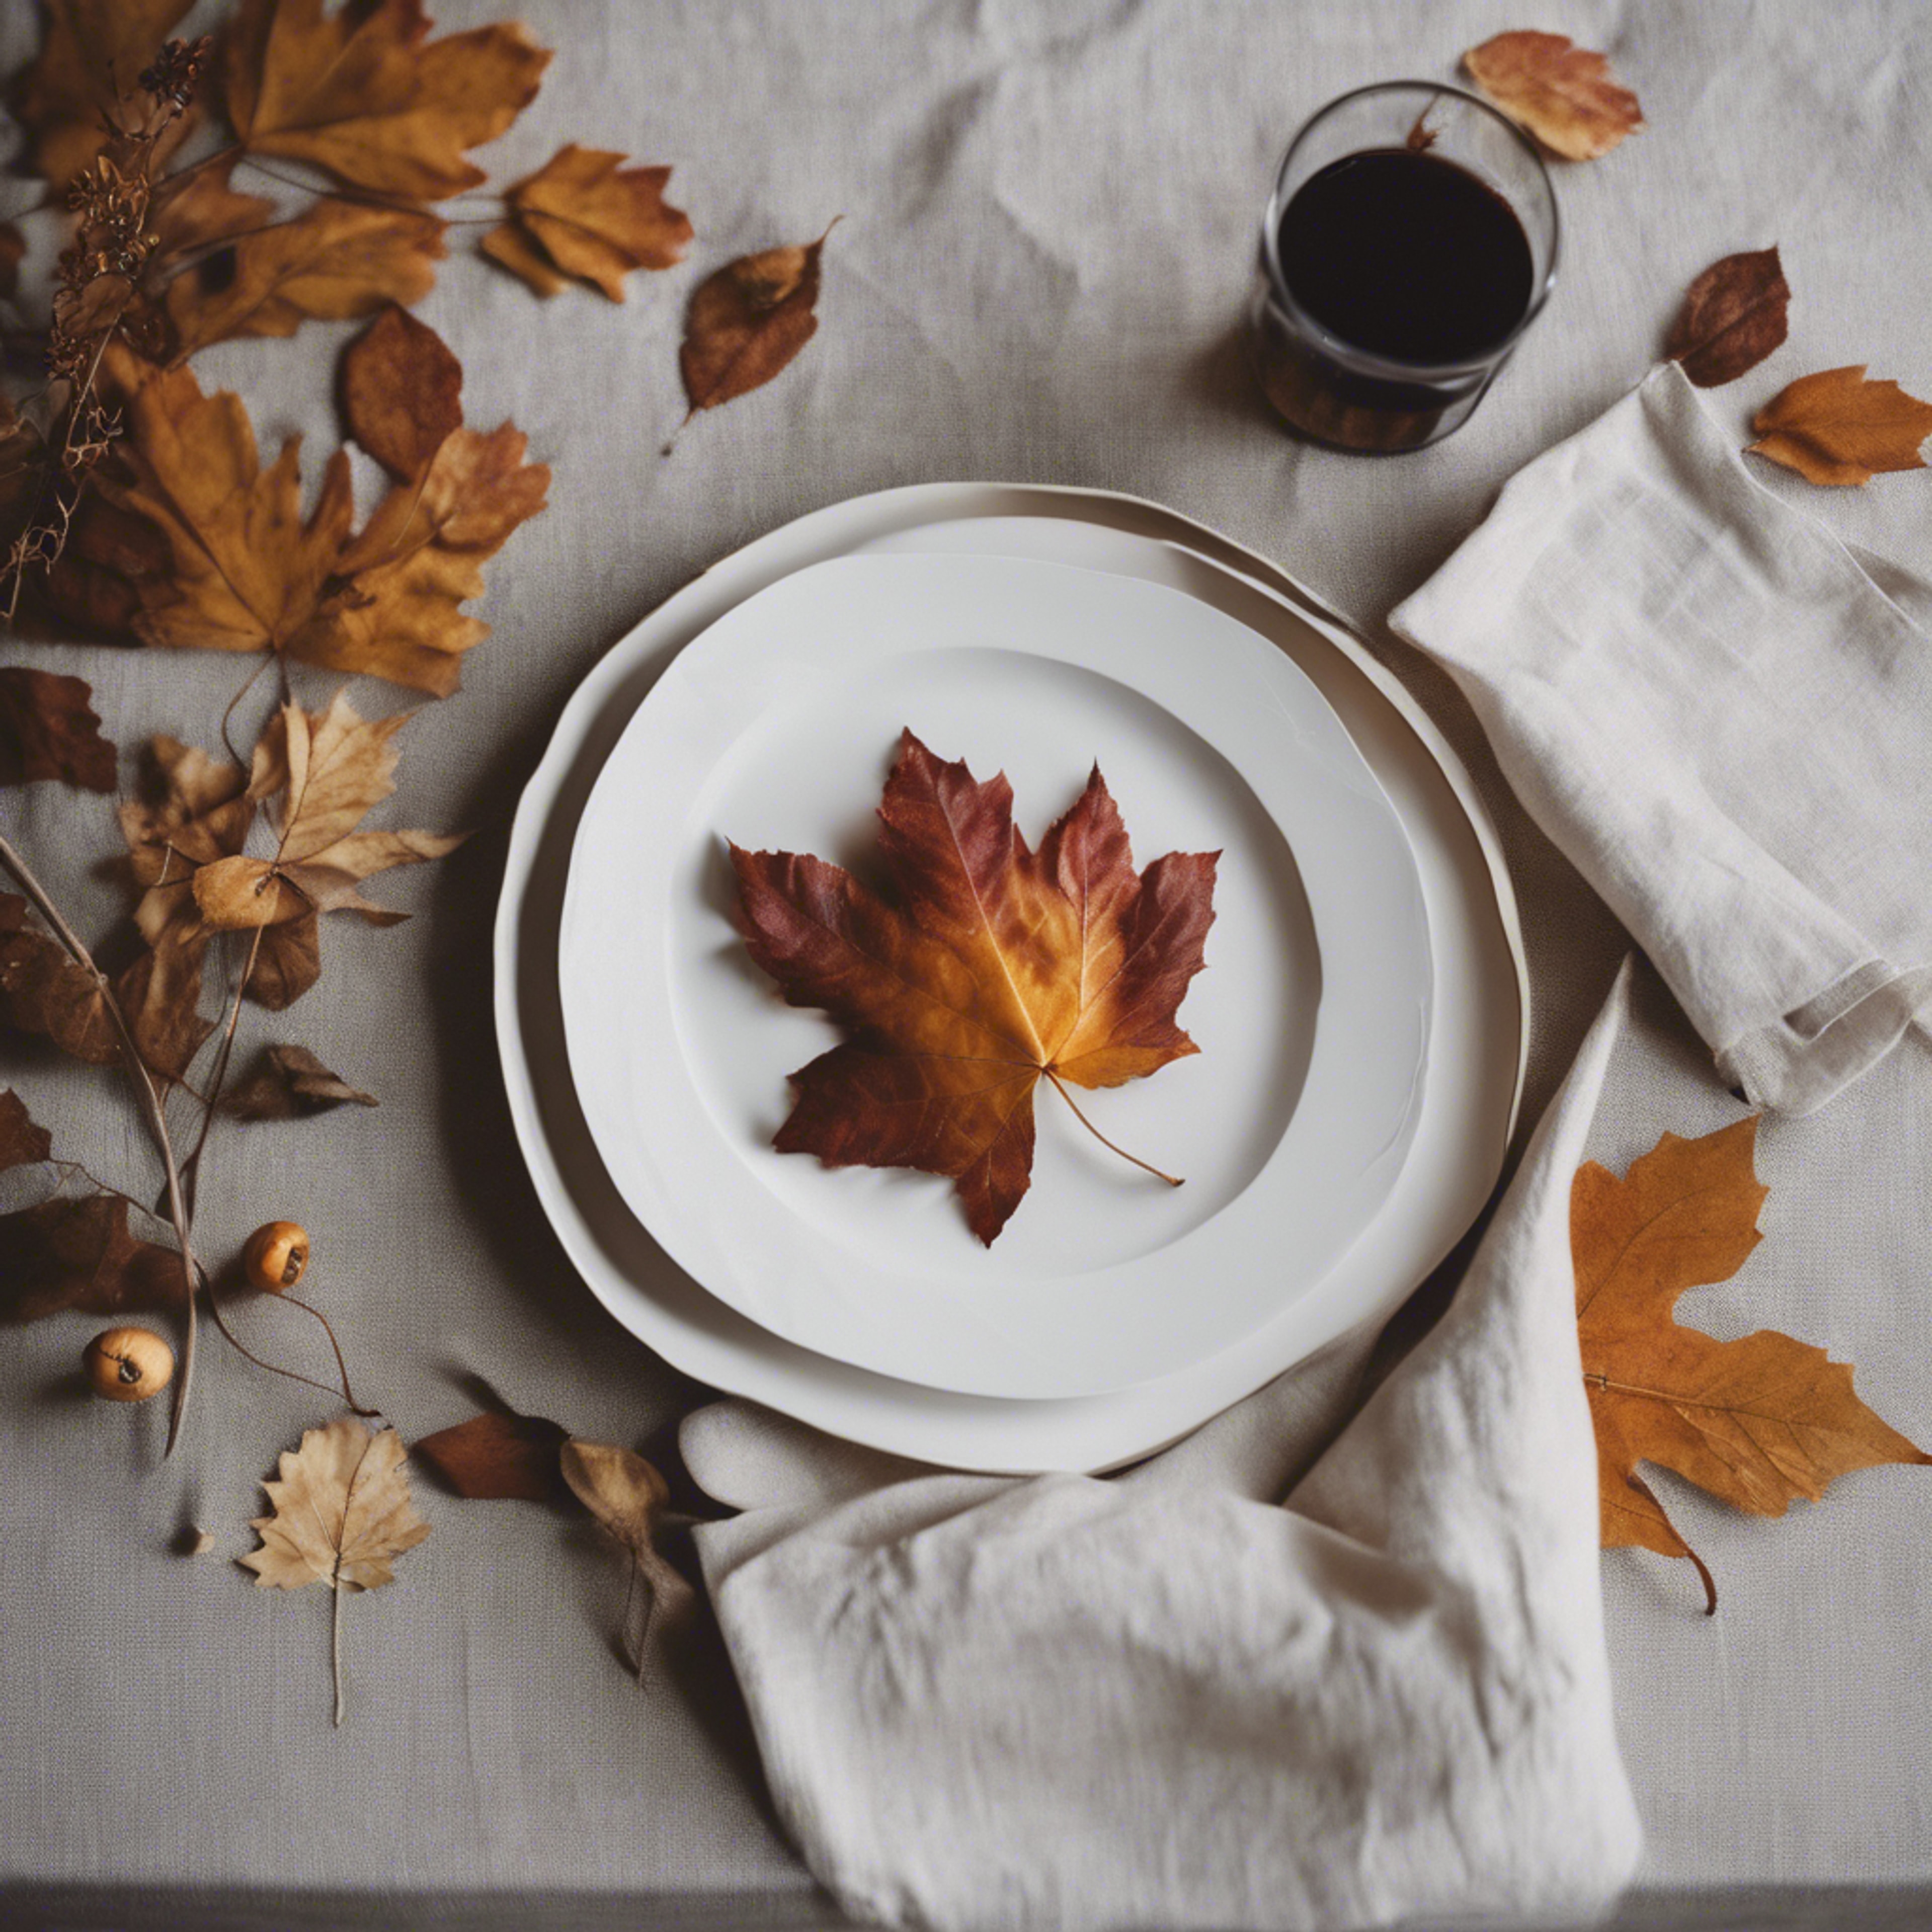 Simplicity-lover's Thanksgiving table decor with minimalistic white plates, natural linen napkins, and a few scattered autumn leaves. Fondo de pantalla[4fdd30c95e164a8e8309]